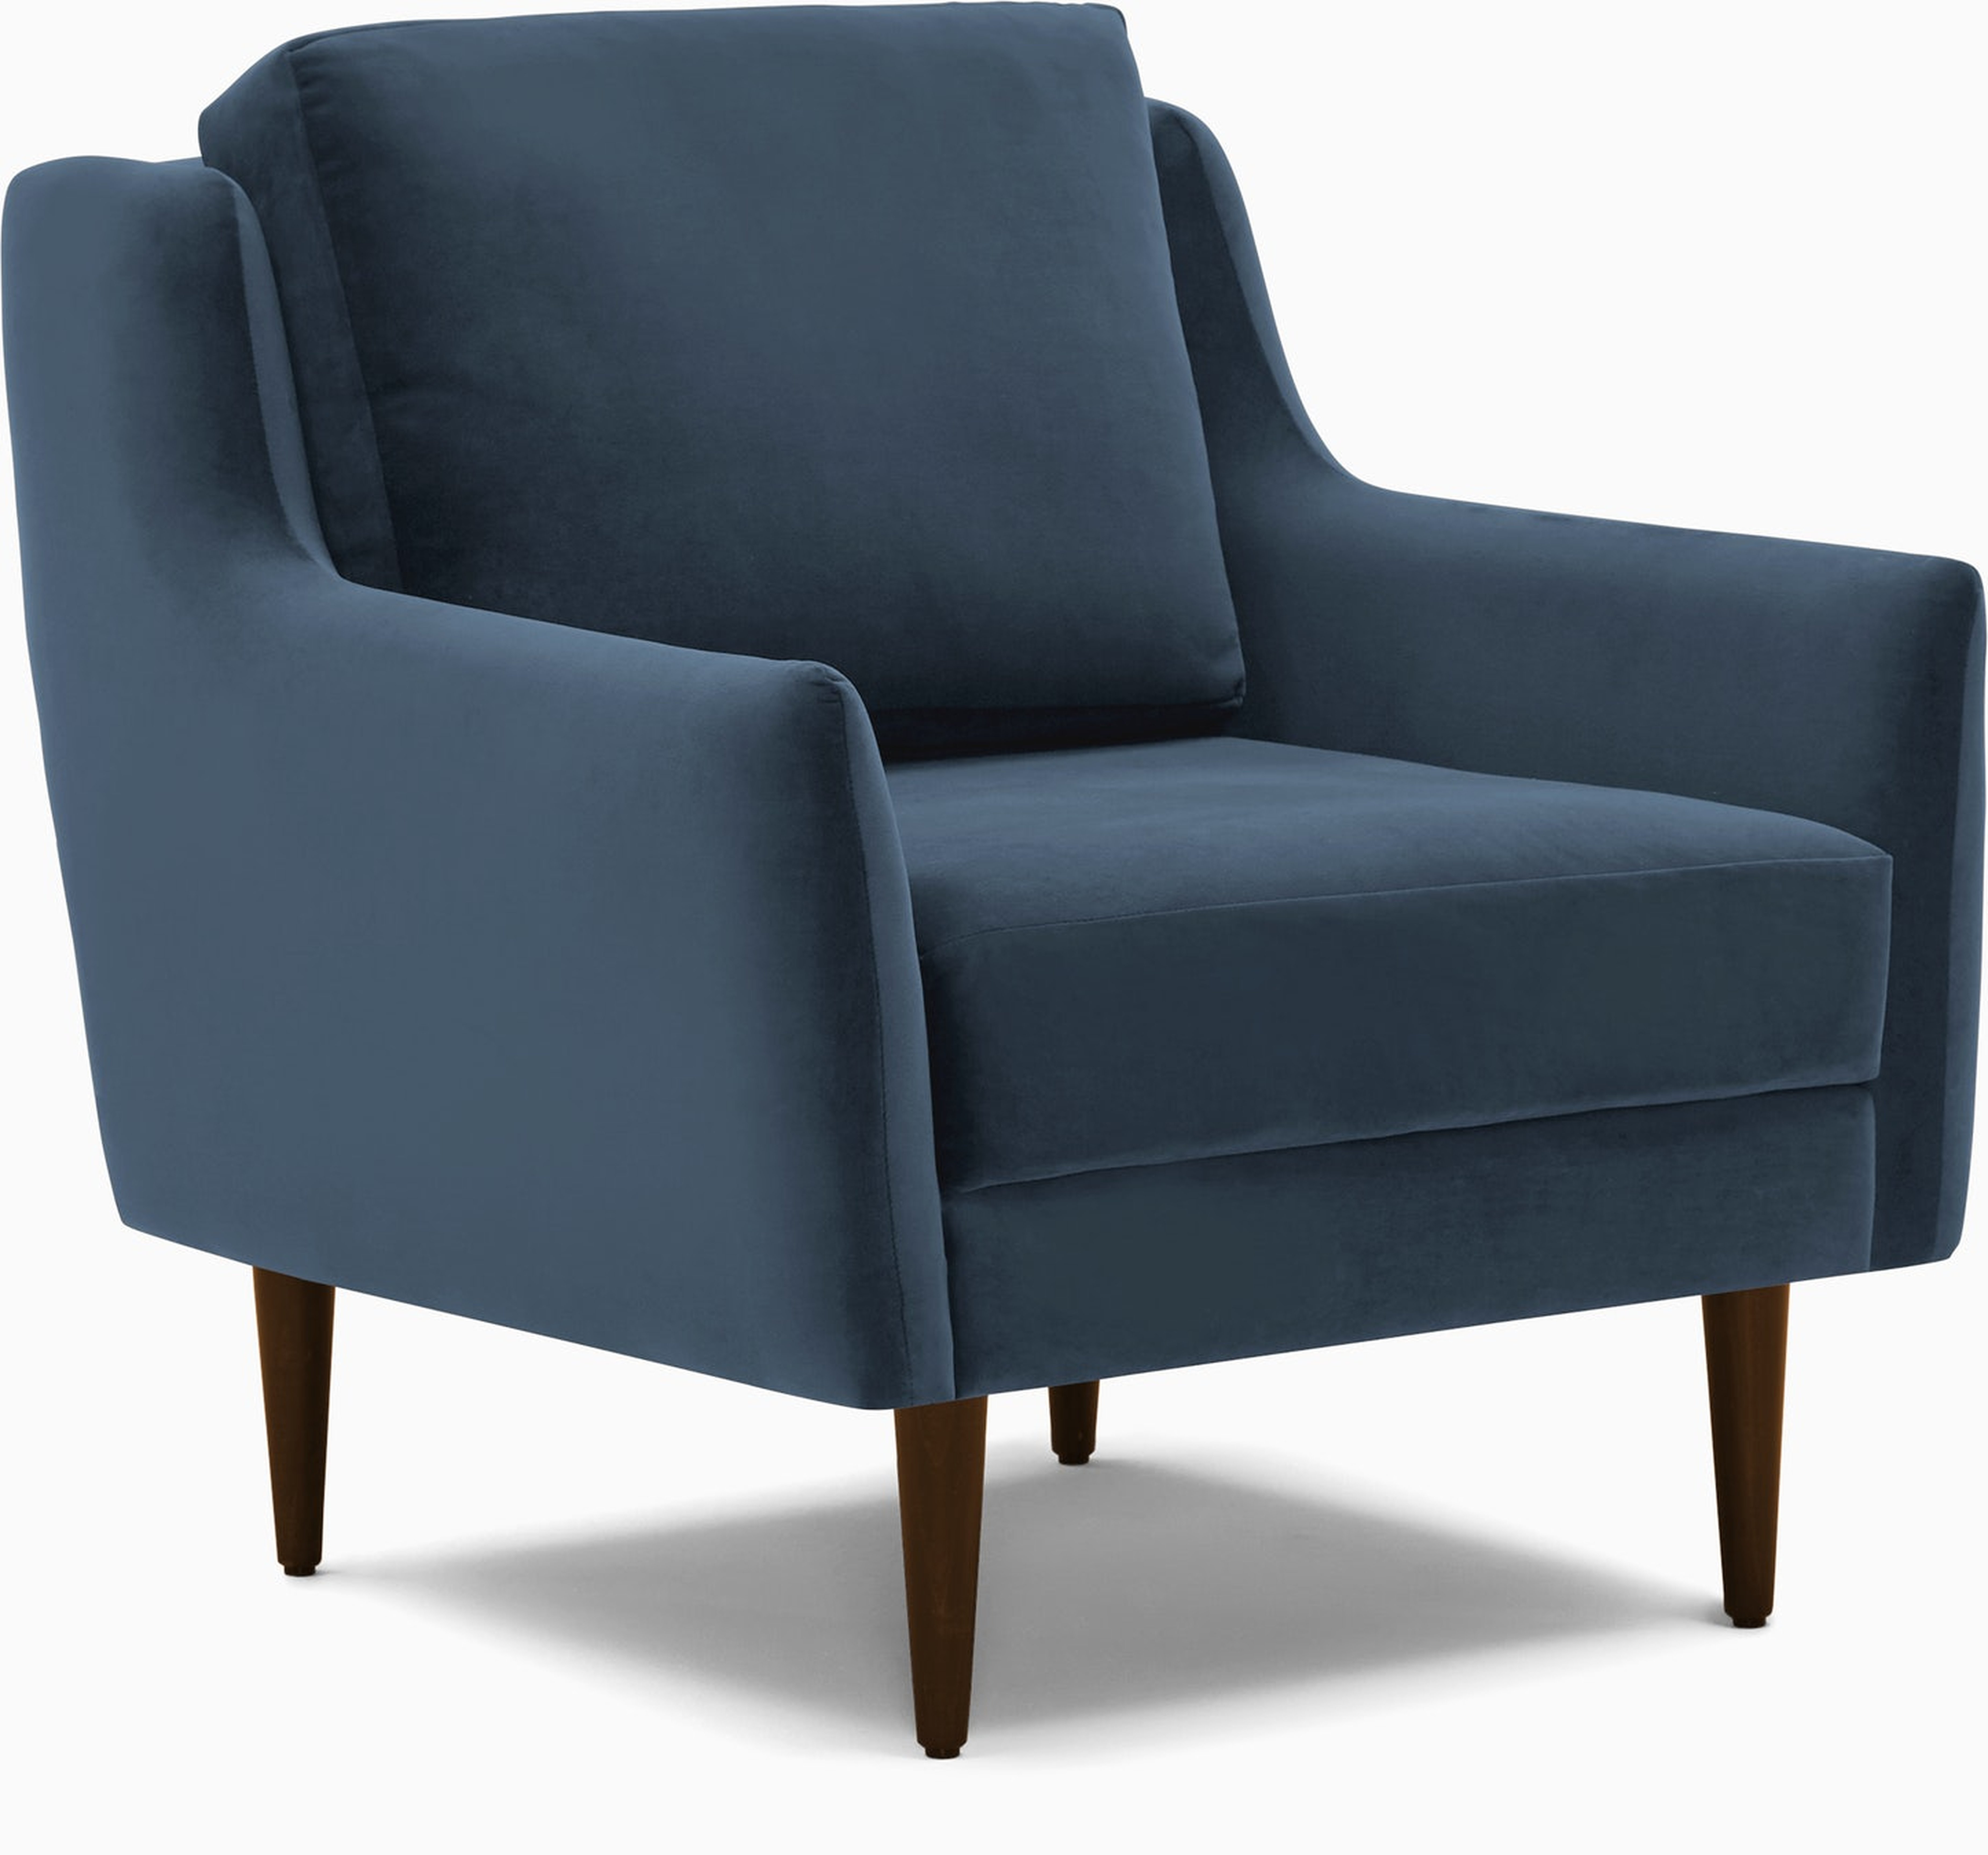 Bell Chair Milo French Blue Fabric Mocha Wood Stain - Joybird